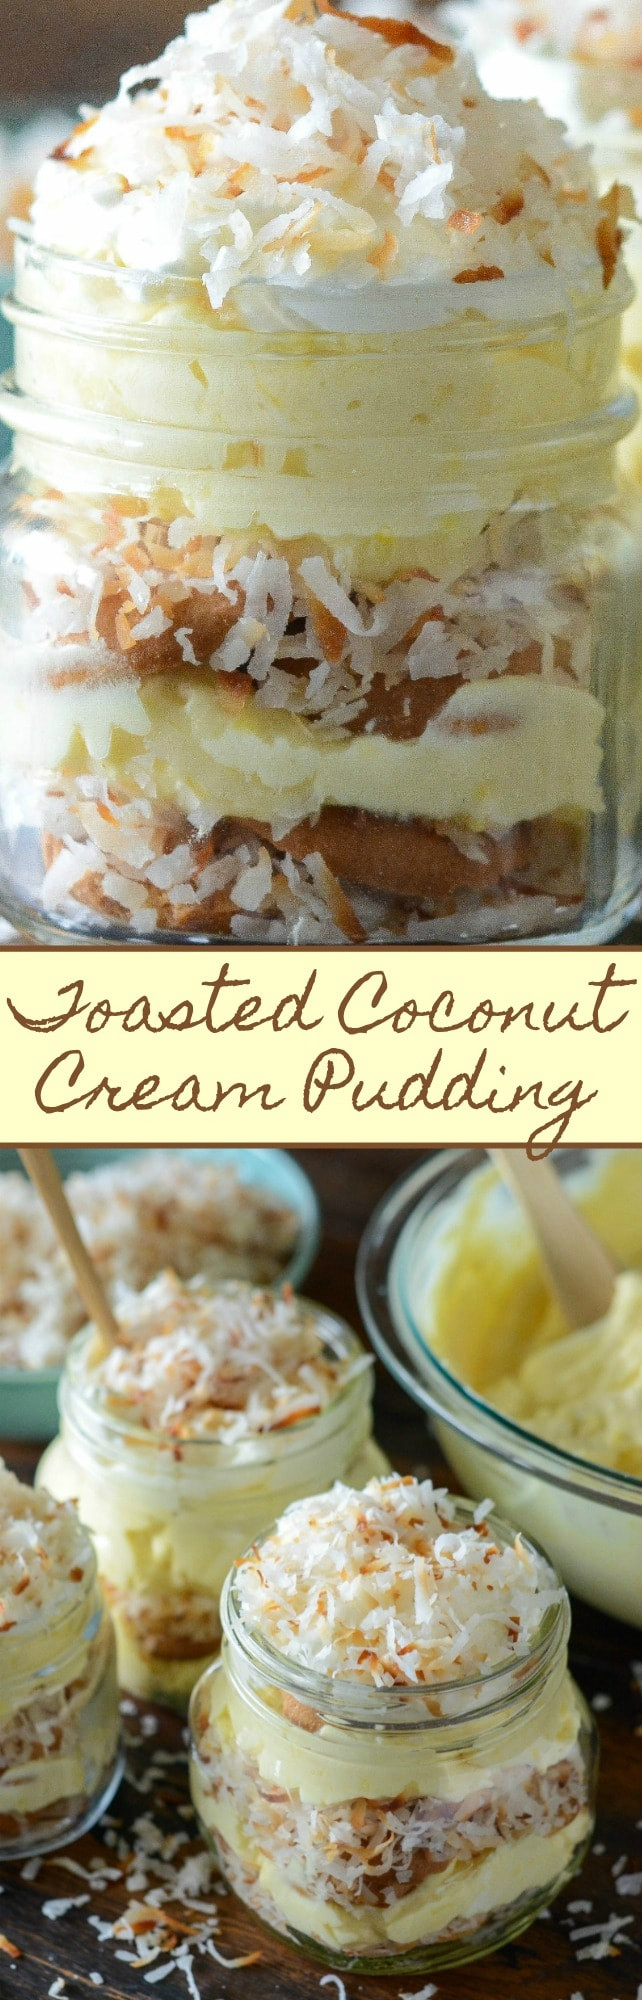 Coconut Cream Pie With Pudding
 Toasted Coconut Cream Pudding